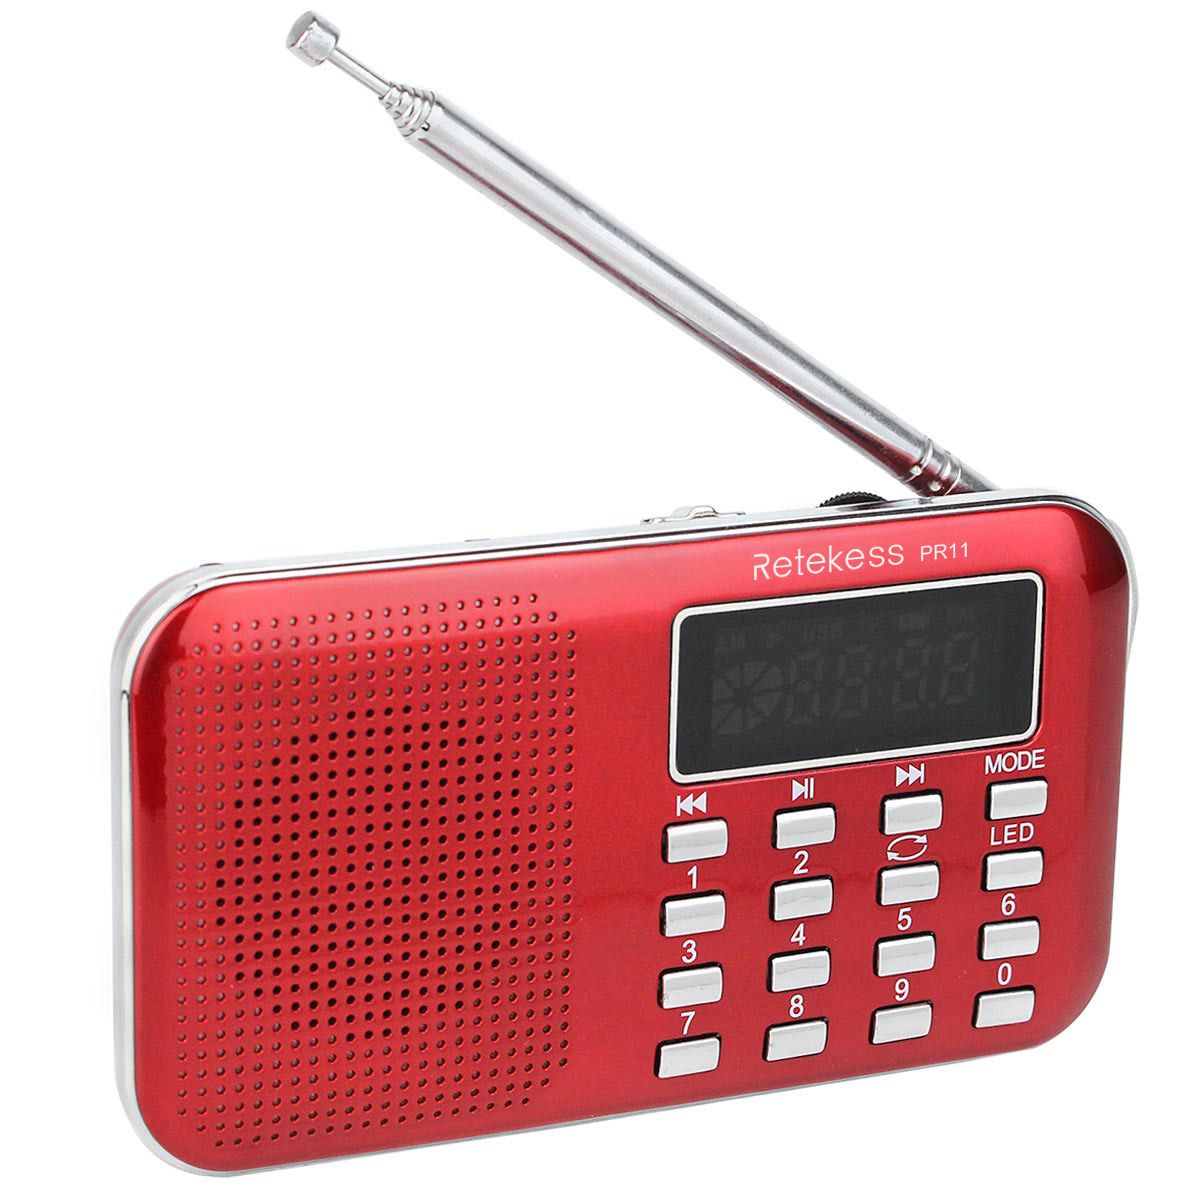 Retekess-PR11-Portable-Digital-Tuning-FM-AM-Radio-TF-Card-USB-Disk-MP3-Music-Player-Flashlight-1492304